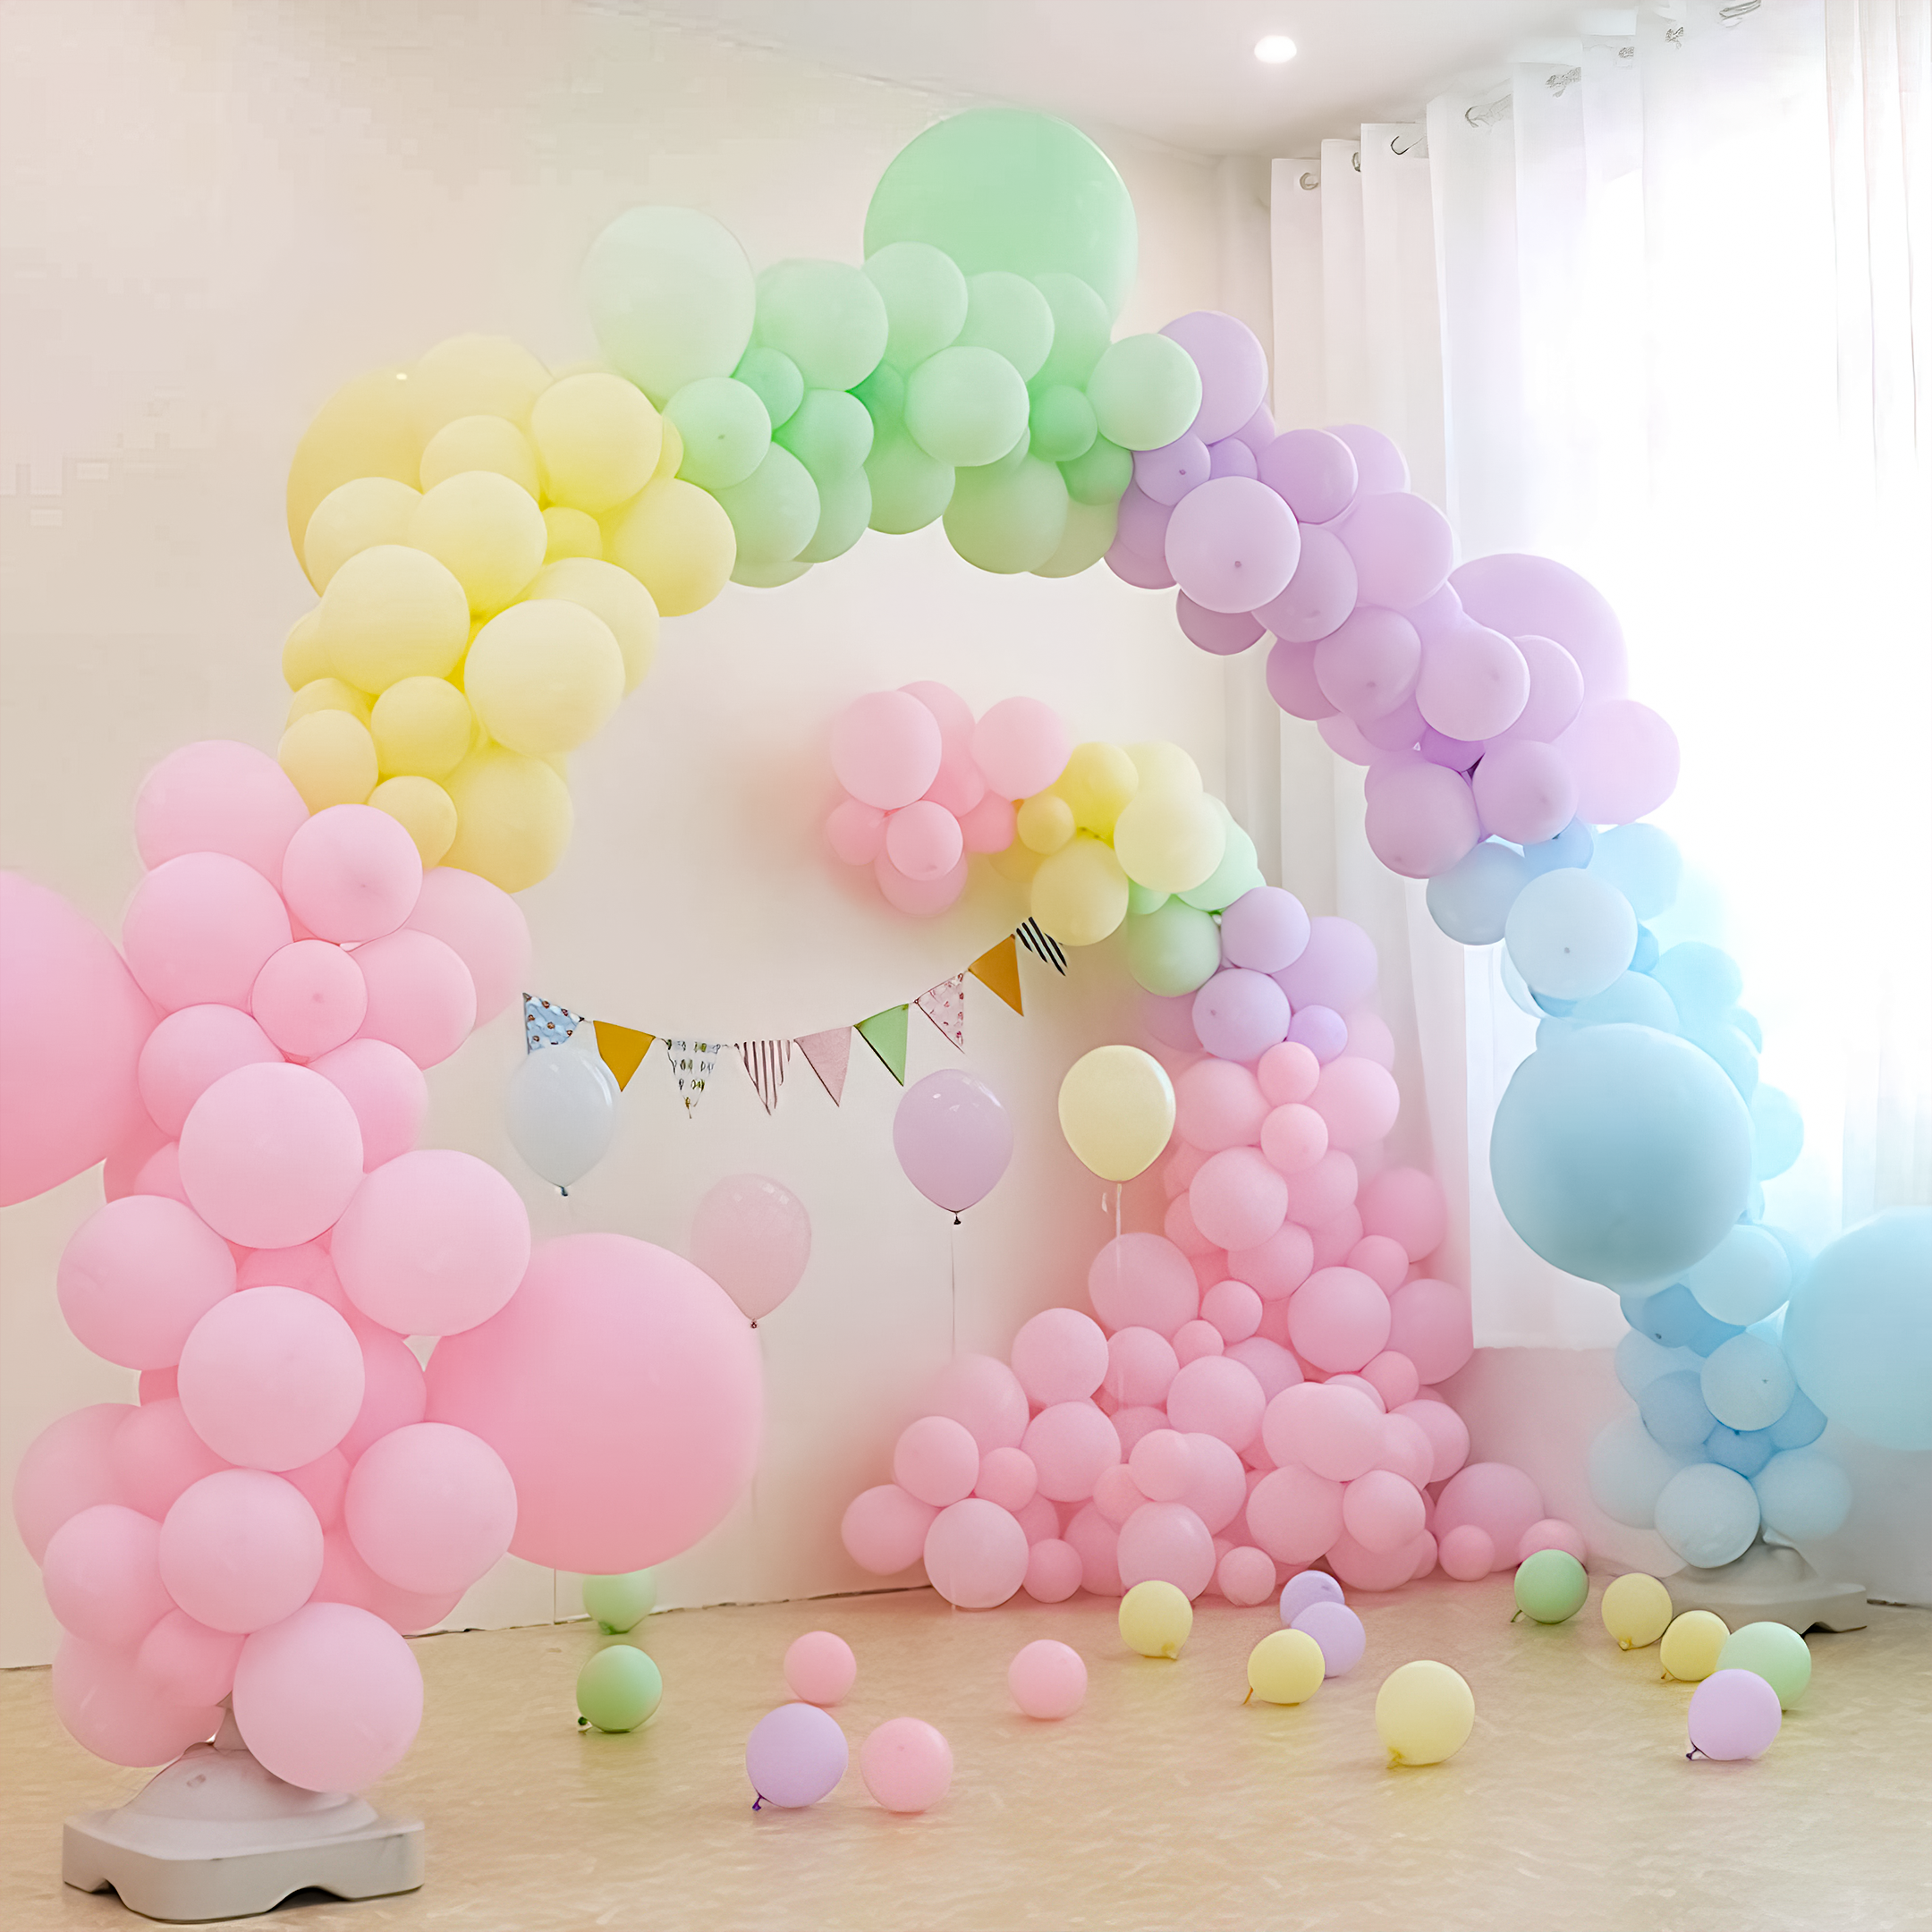 60 Pastel Rainbow Balloons for Decoration